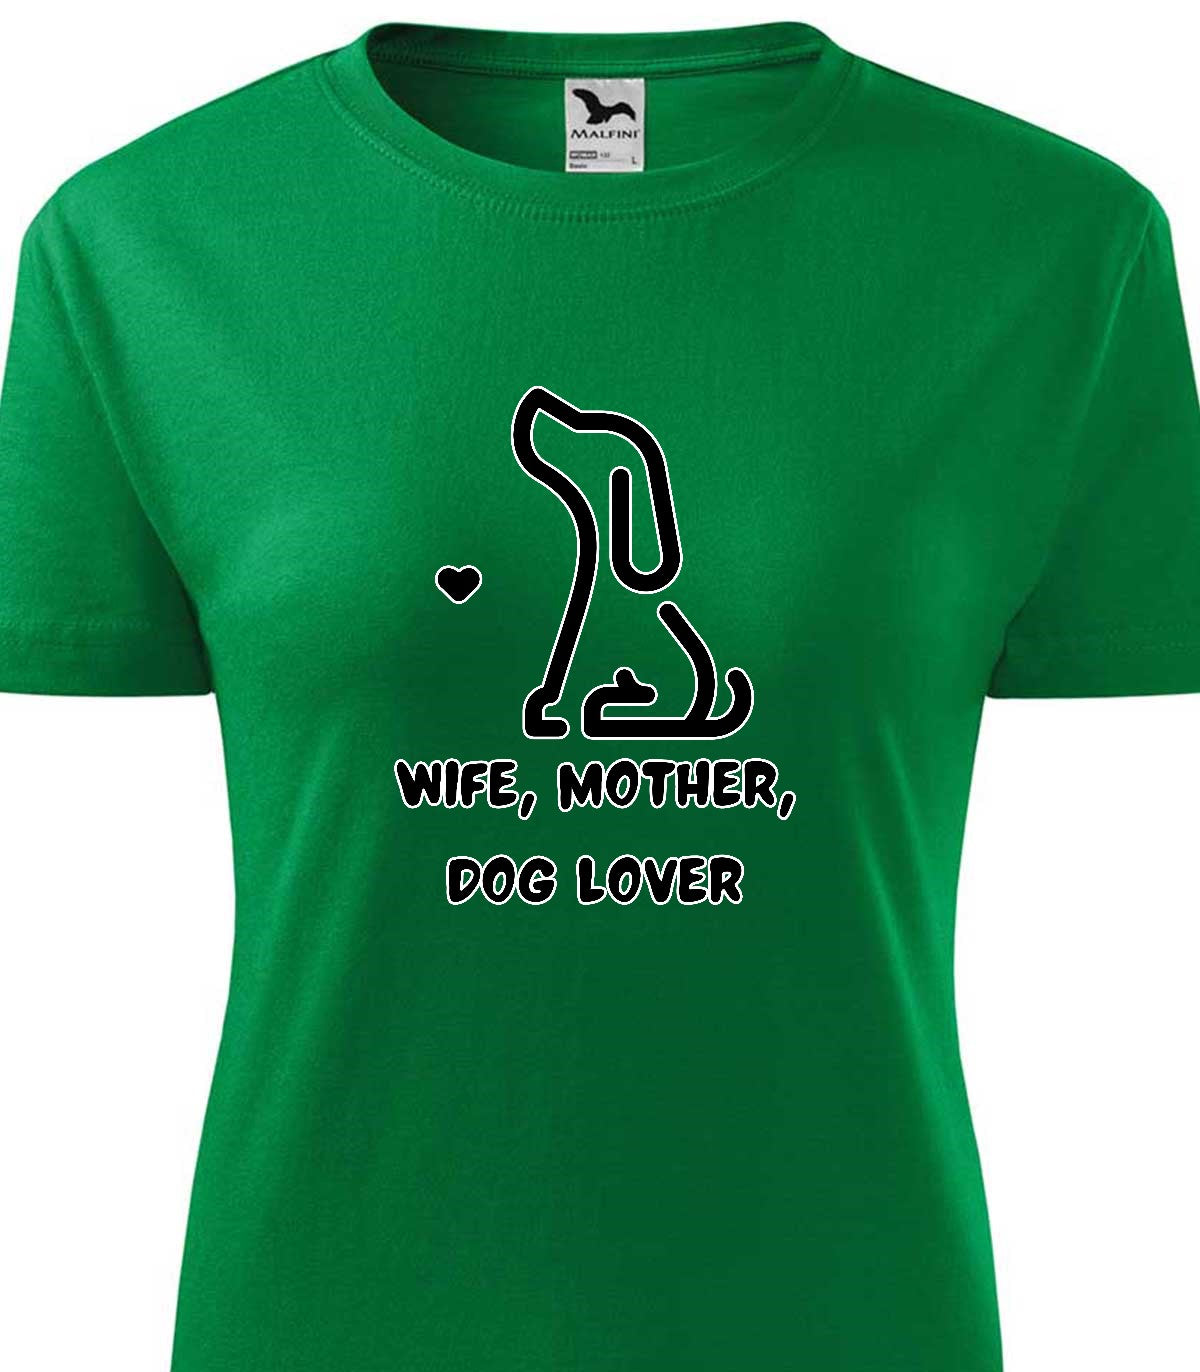 Dog lover mom női technikai póló